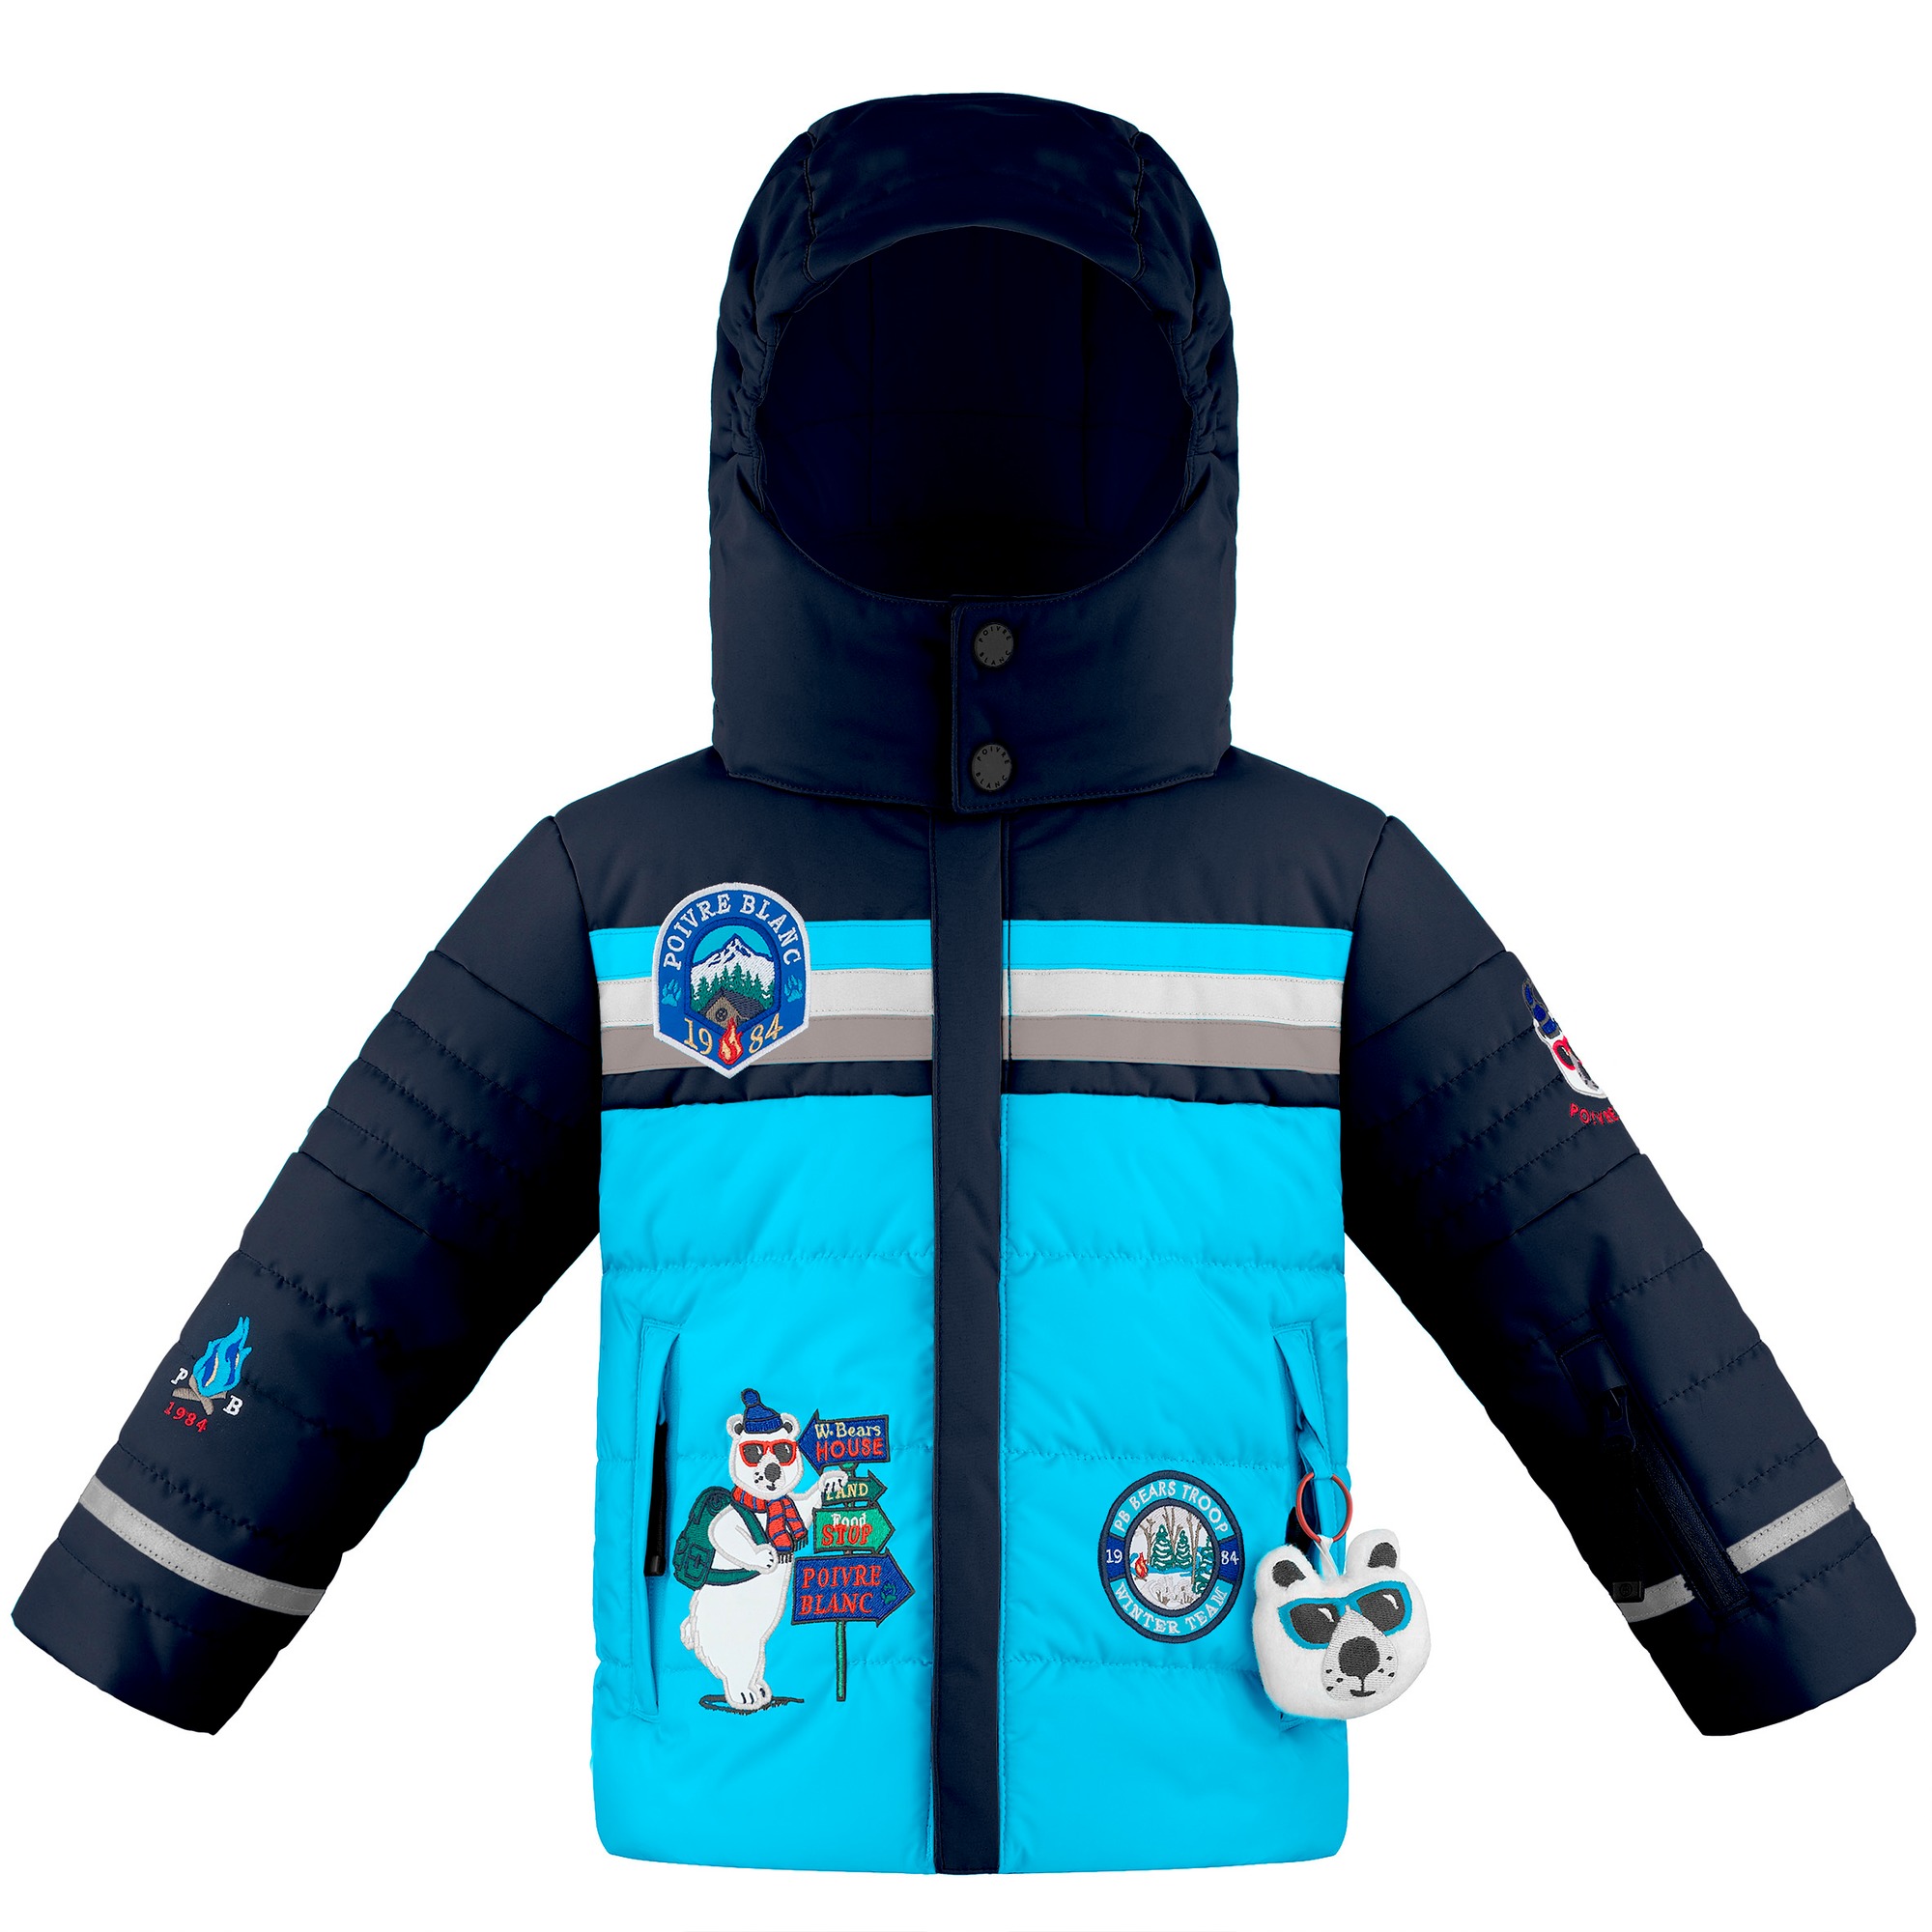 Geci Ski & Snow -  poivre blanc Ski Jacket 274084